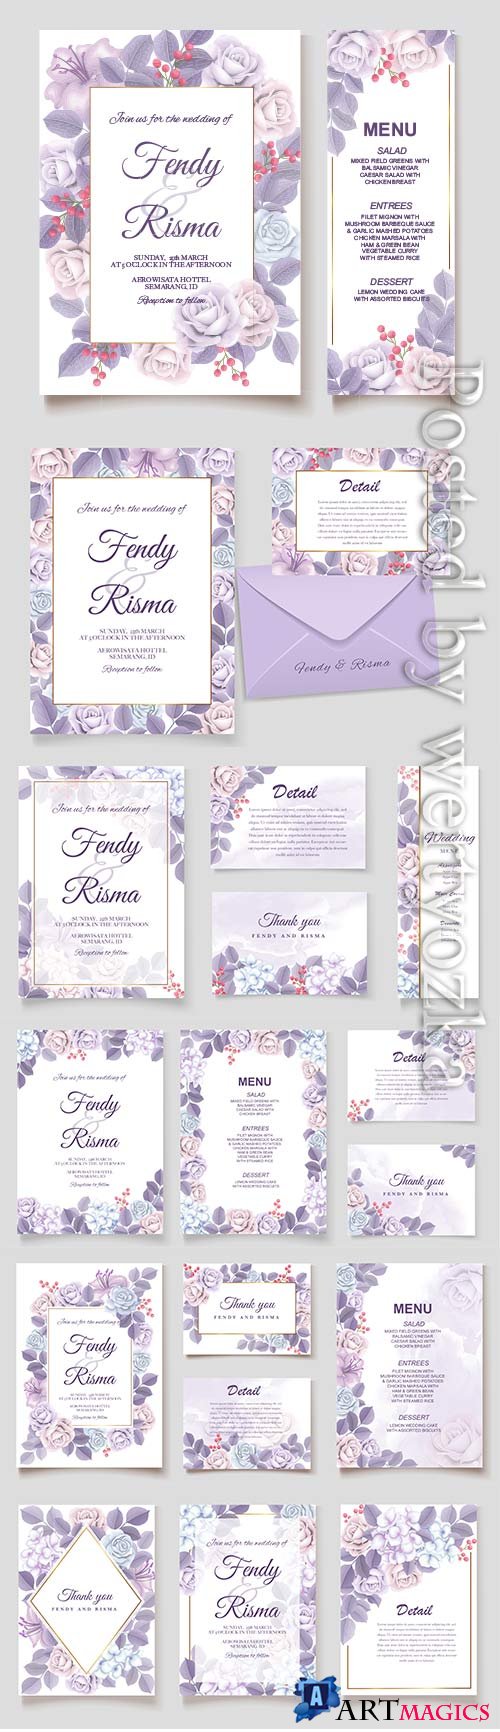 Elegant vector wedding invitation floral design